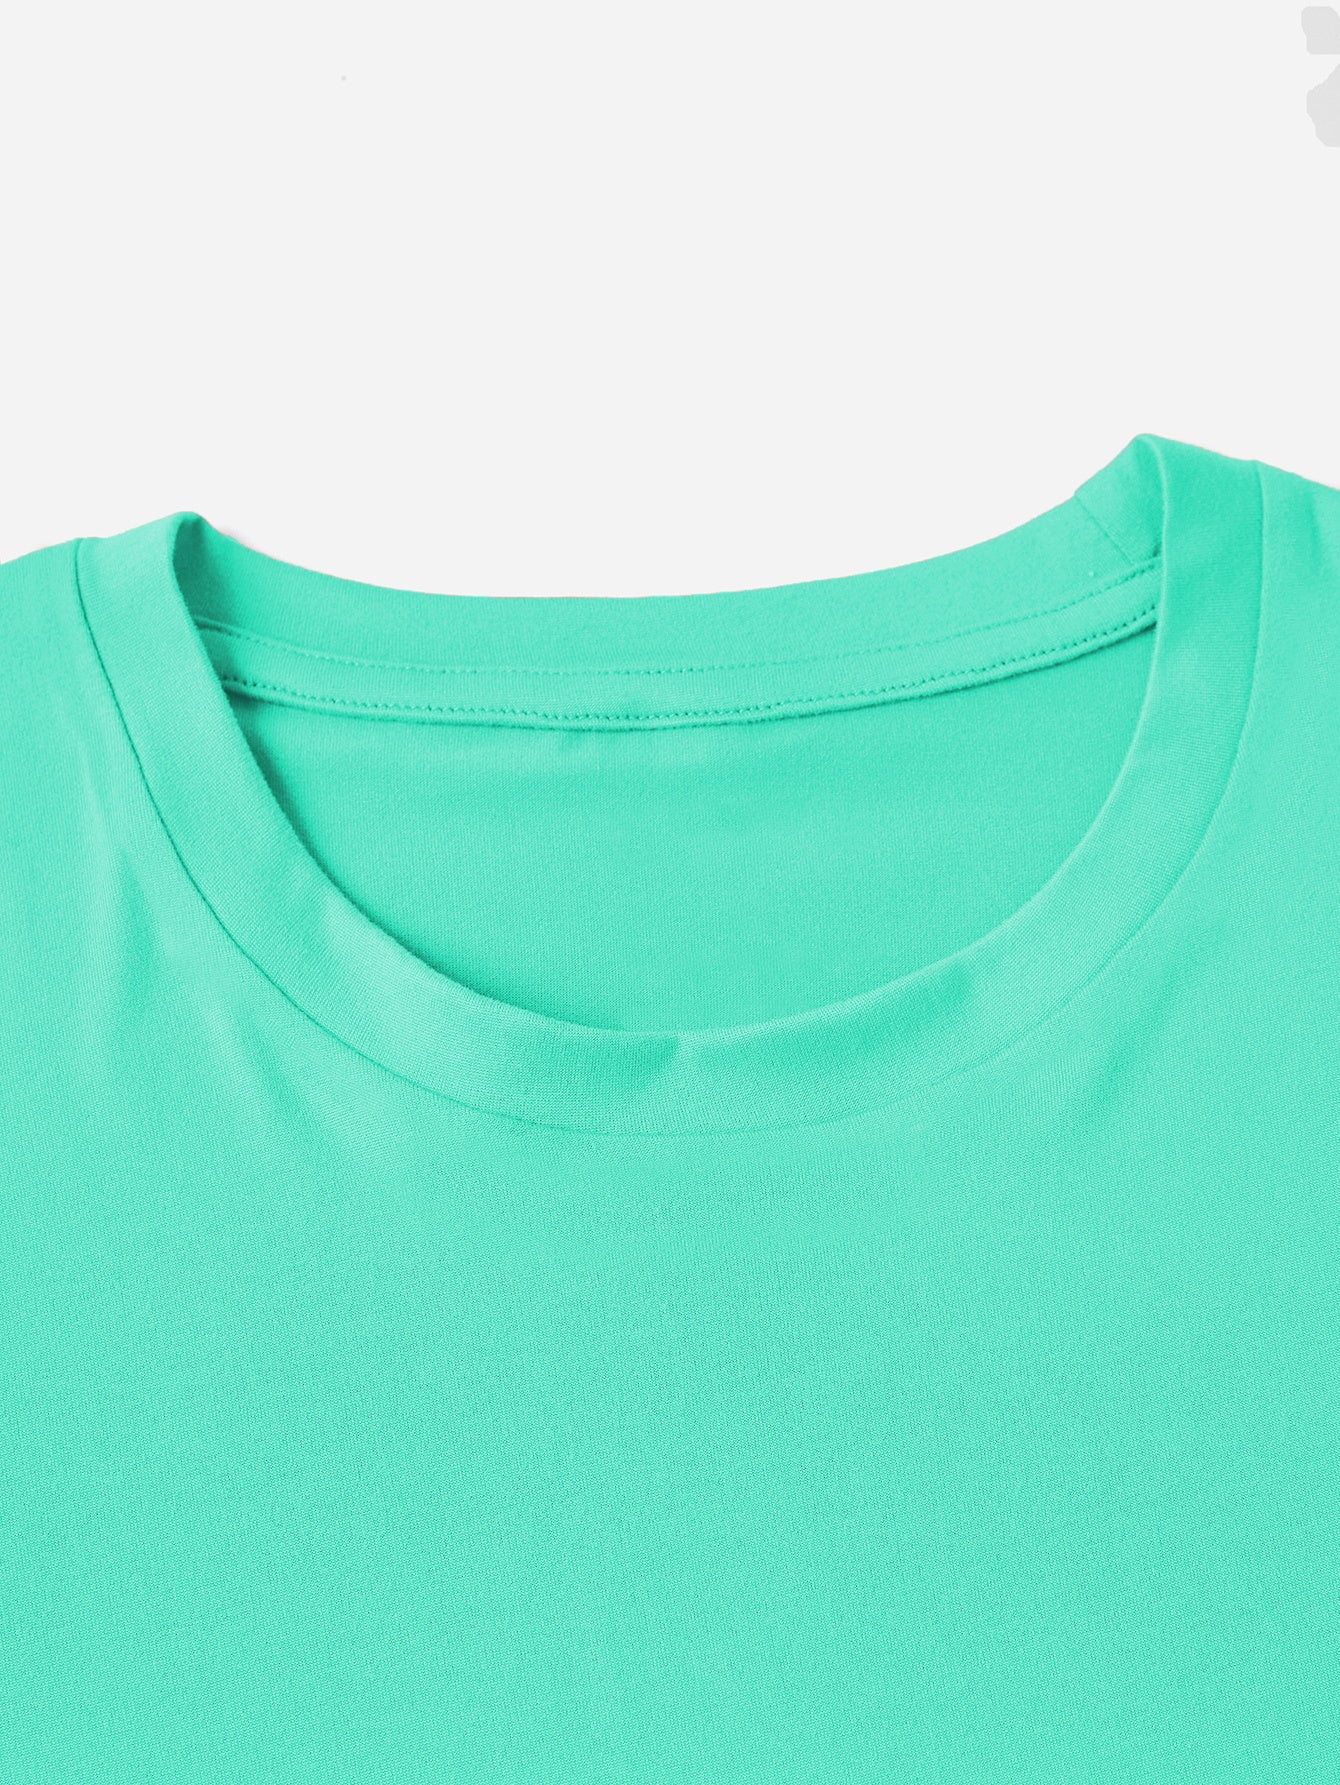 Women's T-shirt Short Sleeve T-Shirts Printing Casual Streetwear Heart Shape